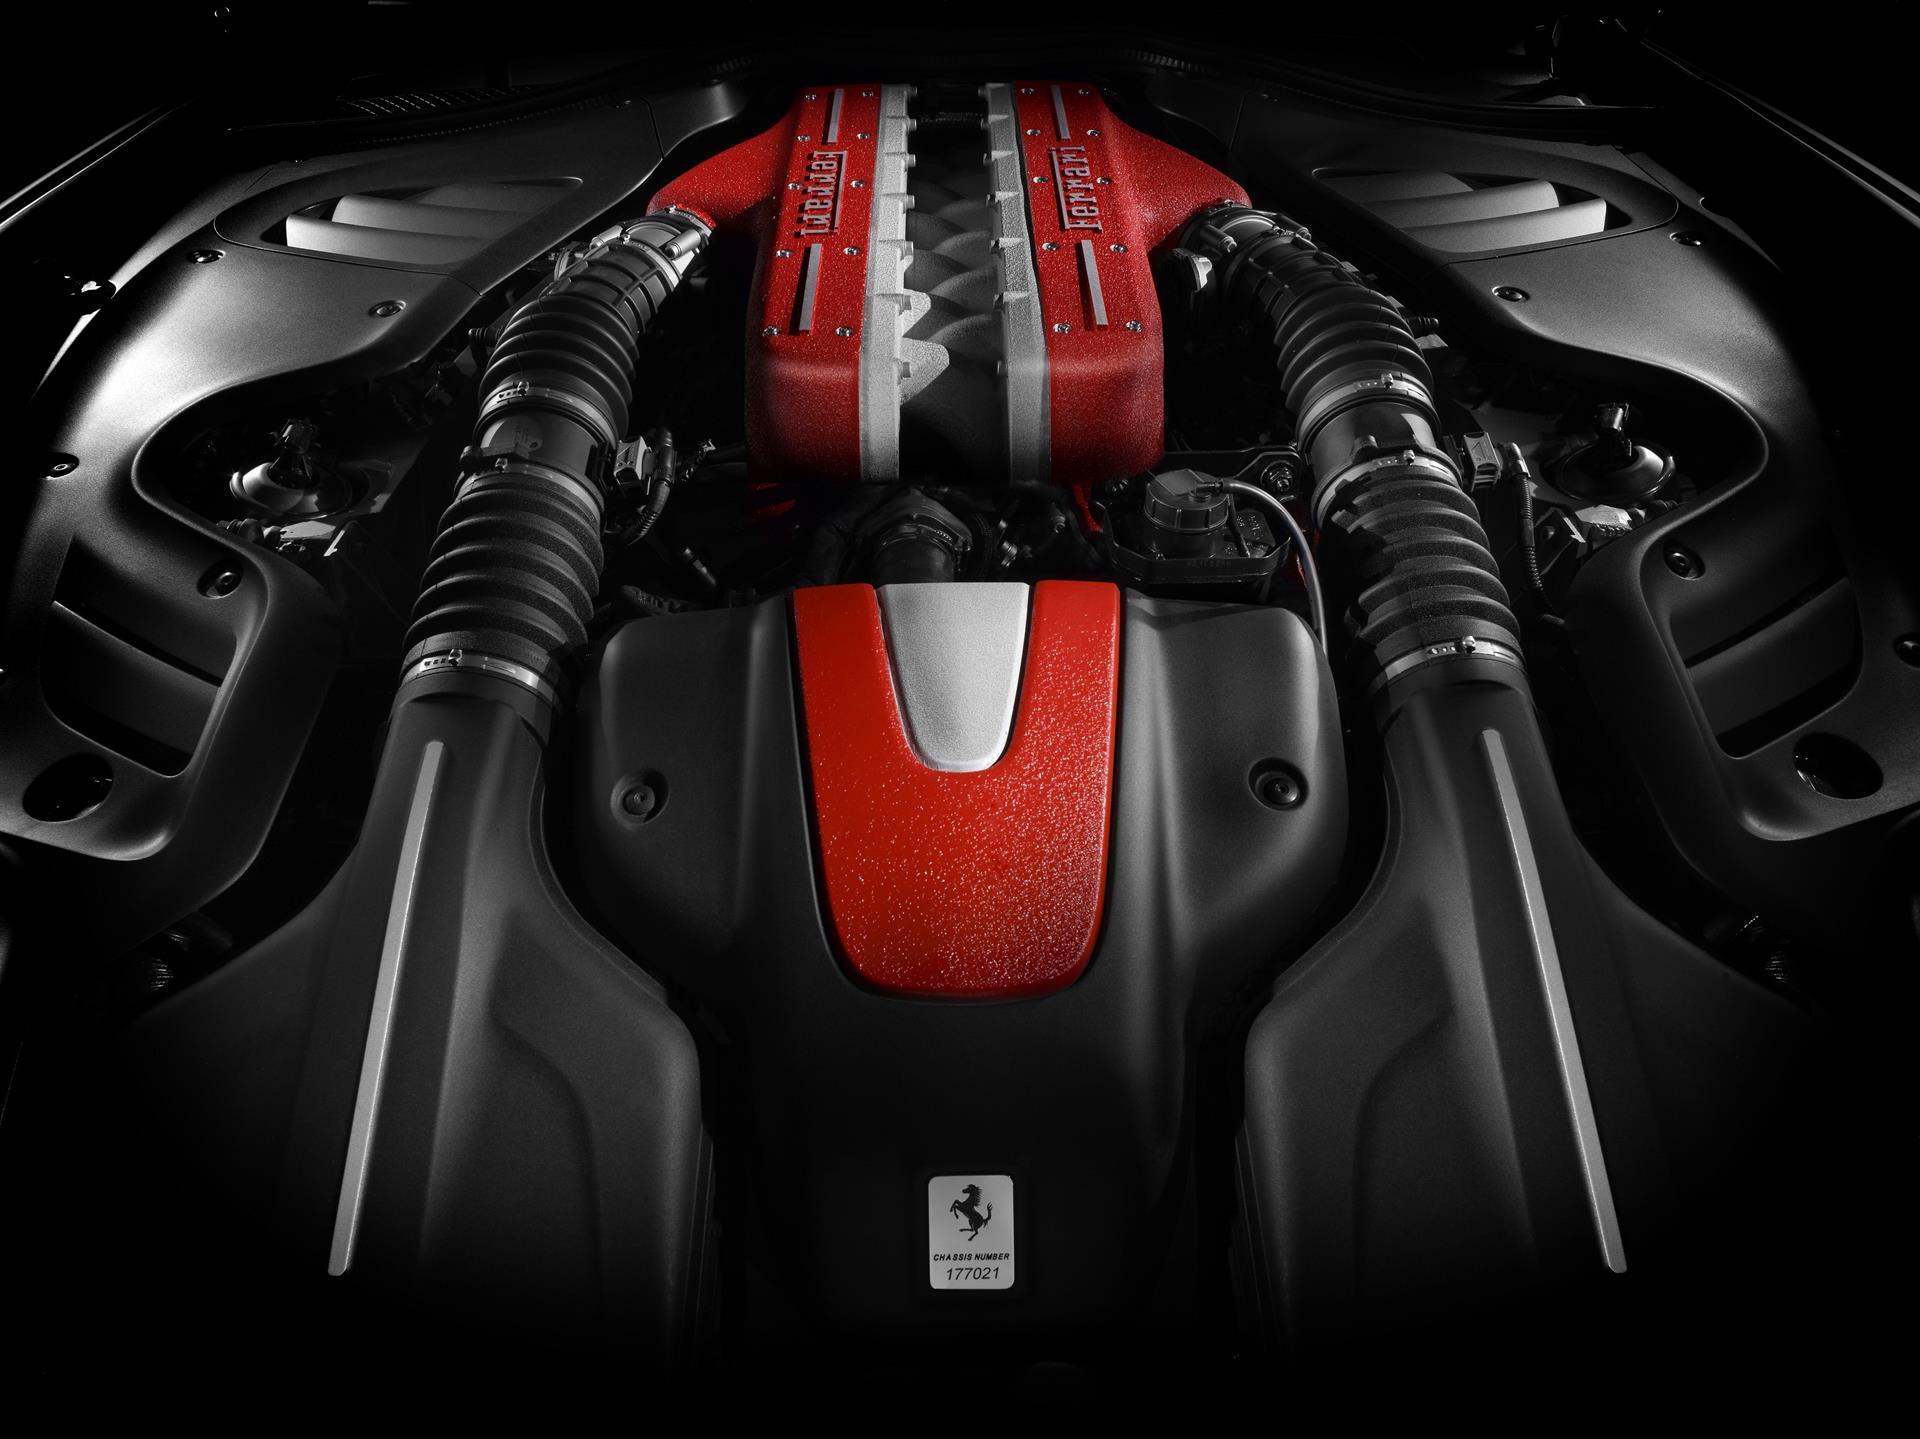 Ferrari FF Supercar 2016 Image E Speed, Wallpaper, Italian Car